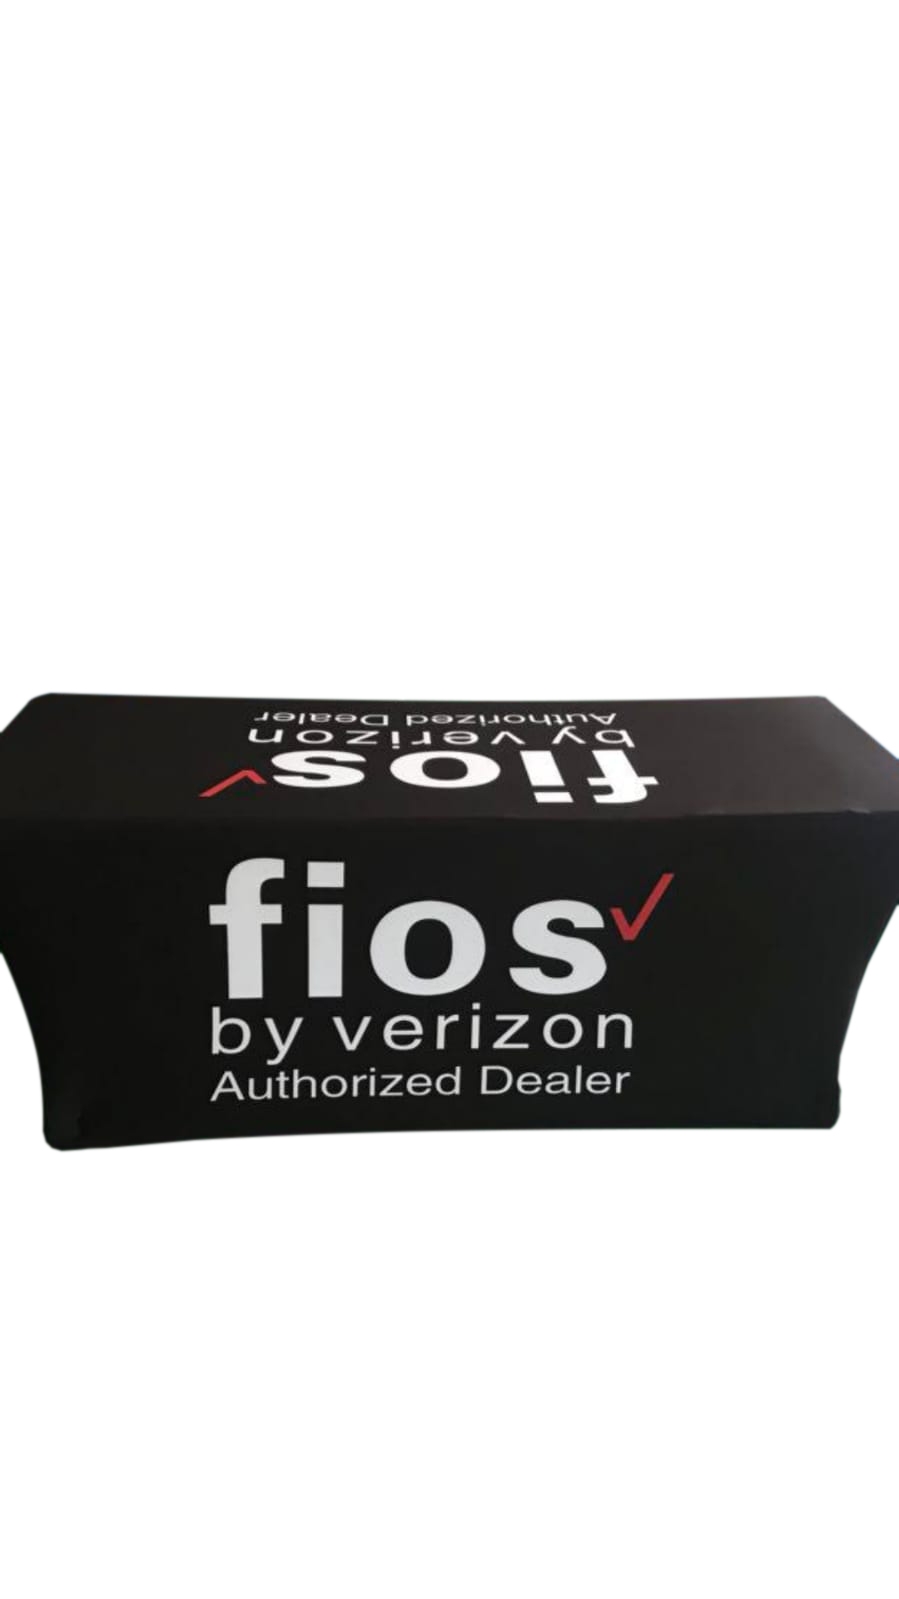 Verizon FIOS table cover